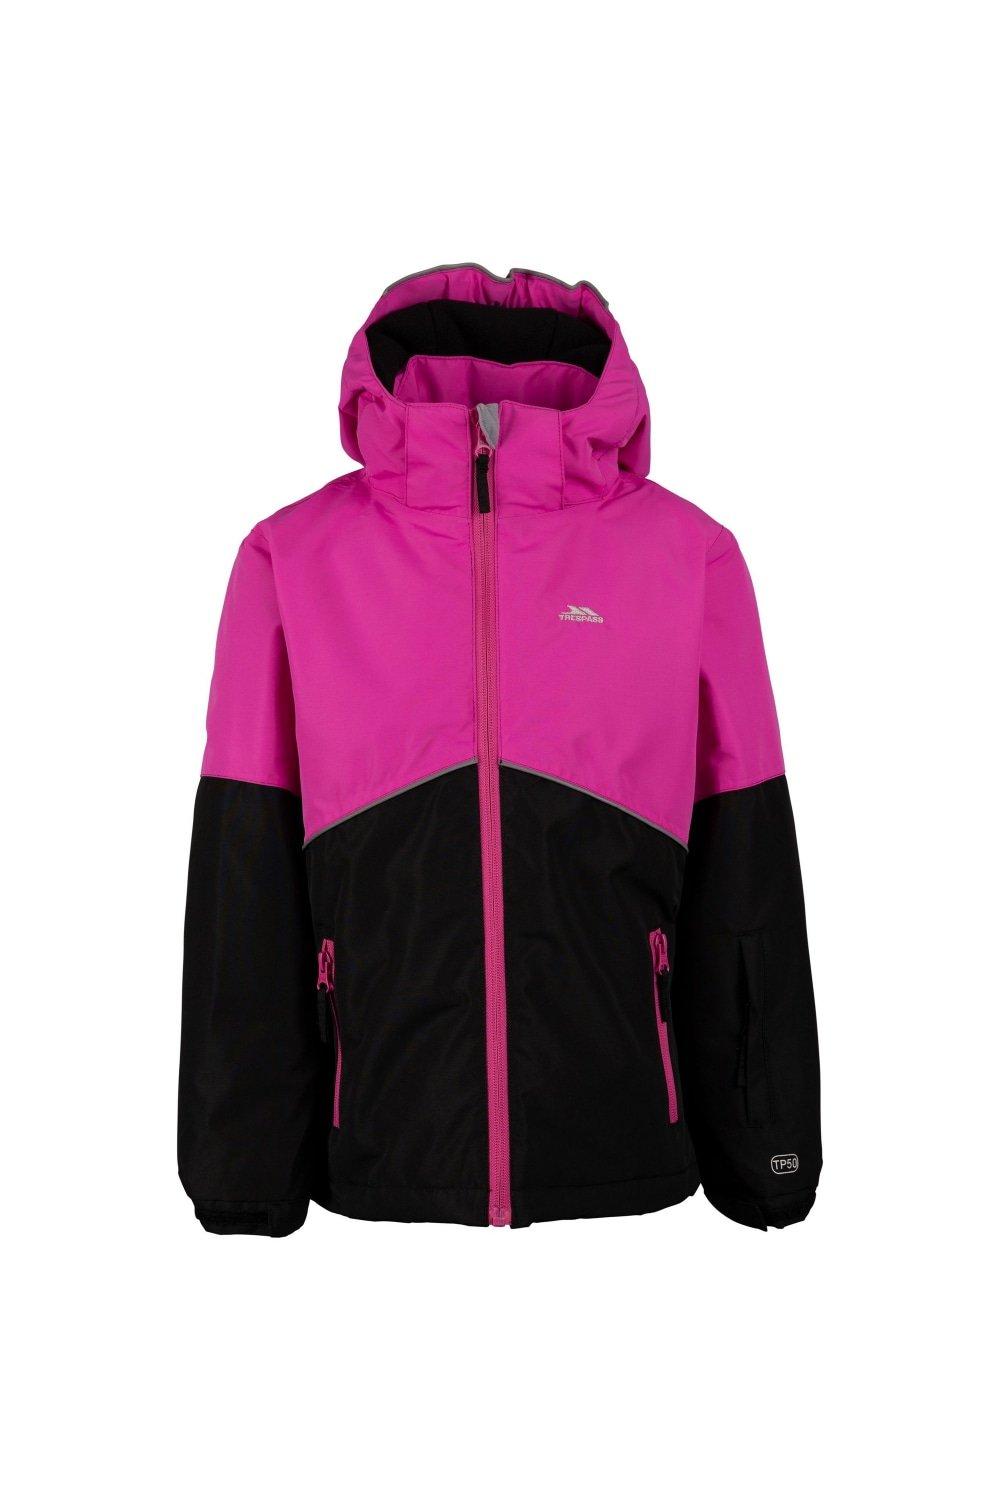 Лыжная куртка Precision TP50 Trespass, розовый